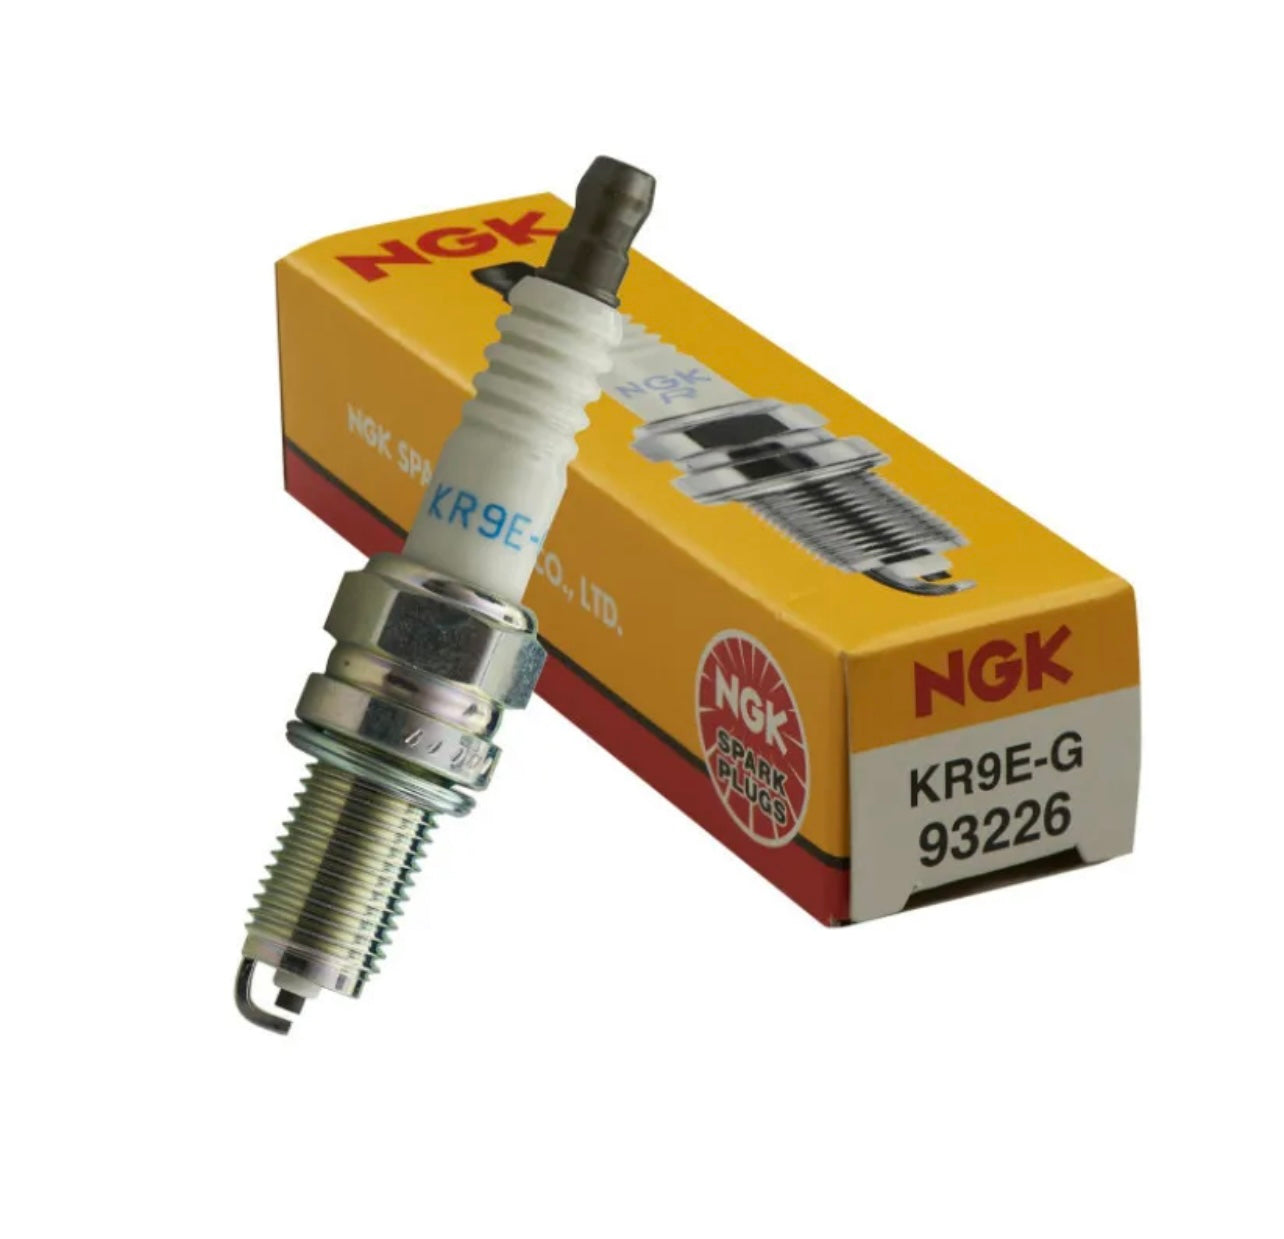 NGK Spark Plug Seadoo Sea-doo RXT-X RXP-X GTX ACE 300 bhp 1640 KR9E-G